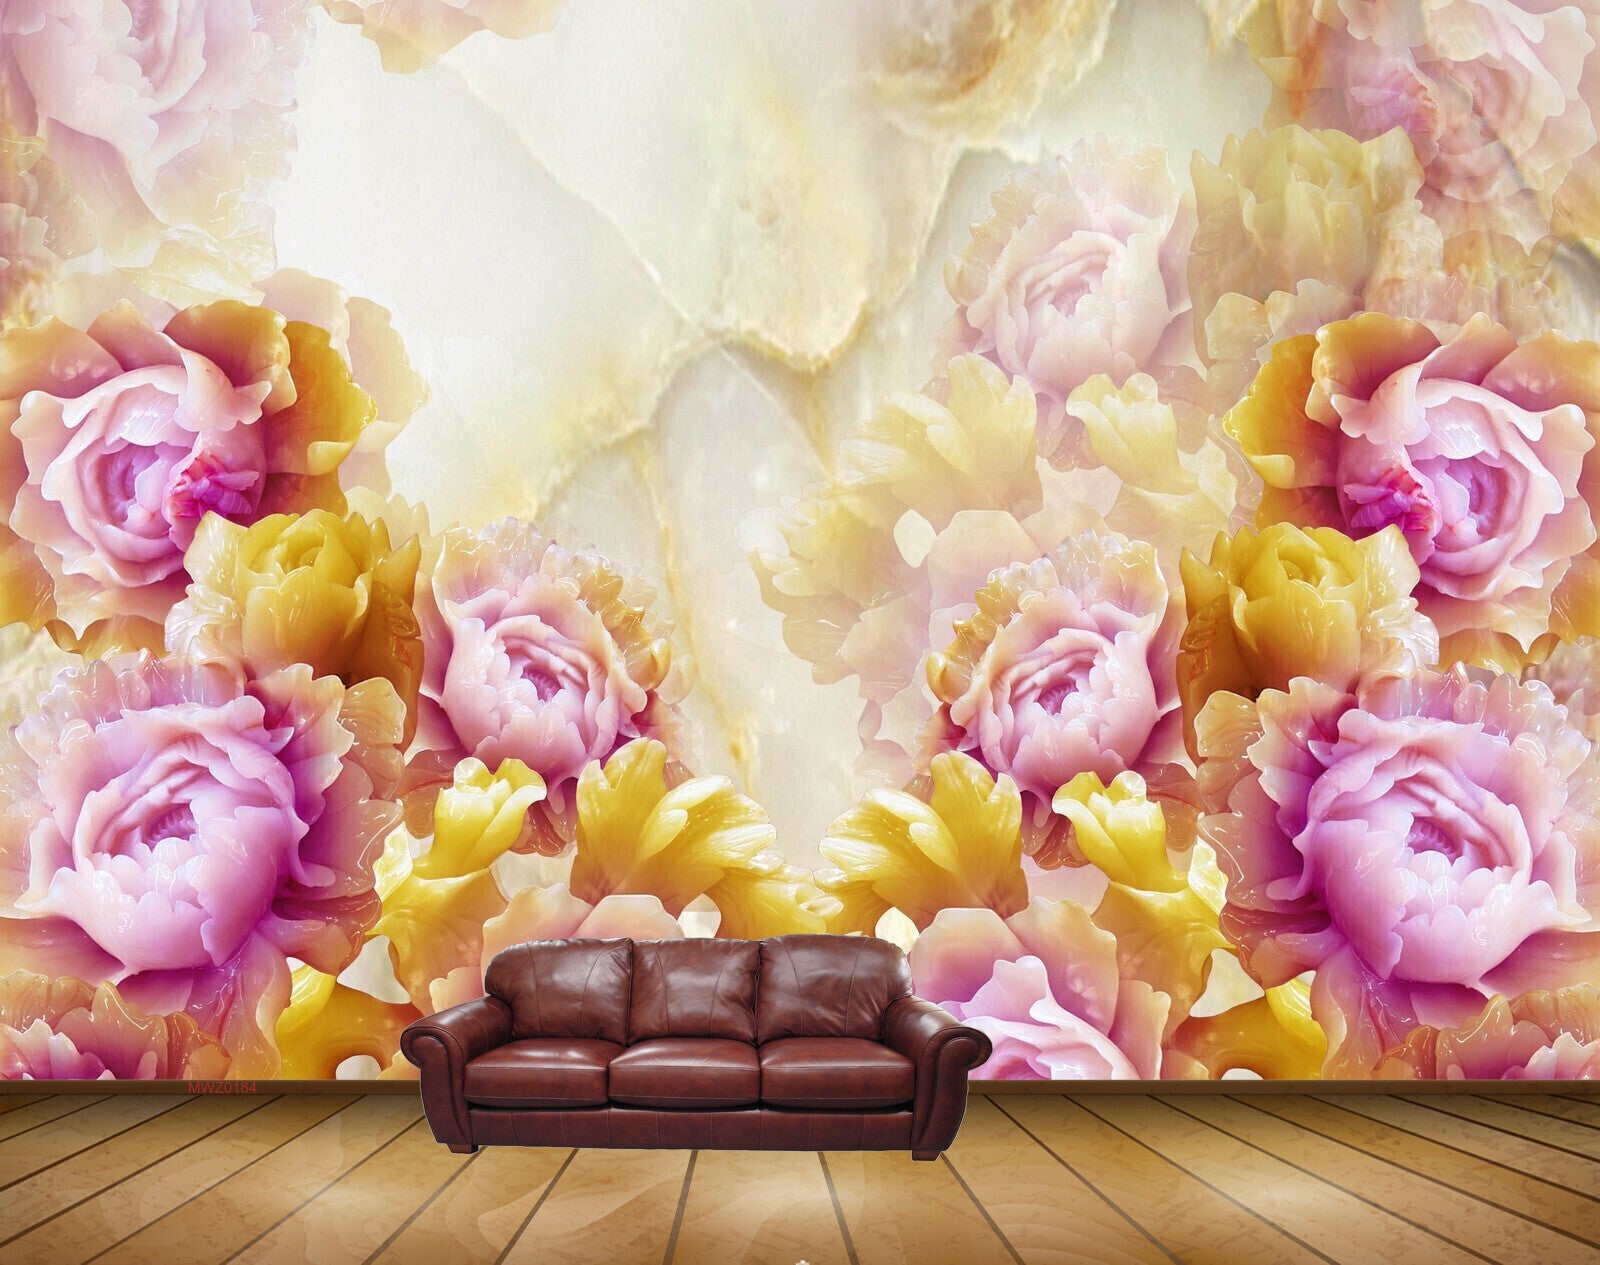 Mystic Walls MWZ1888 Pink Rose Flowers HD 3D Wallpaper for Bedroom Hall4  ft x 3 ft  122 cm x 91 cm  Amazonin Home Improvement